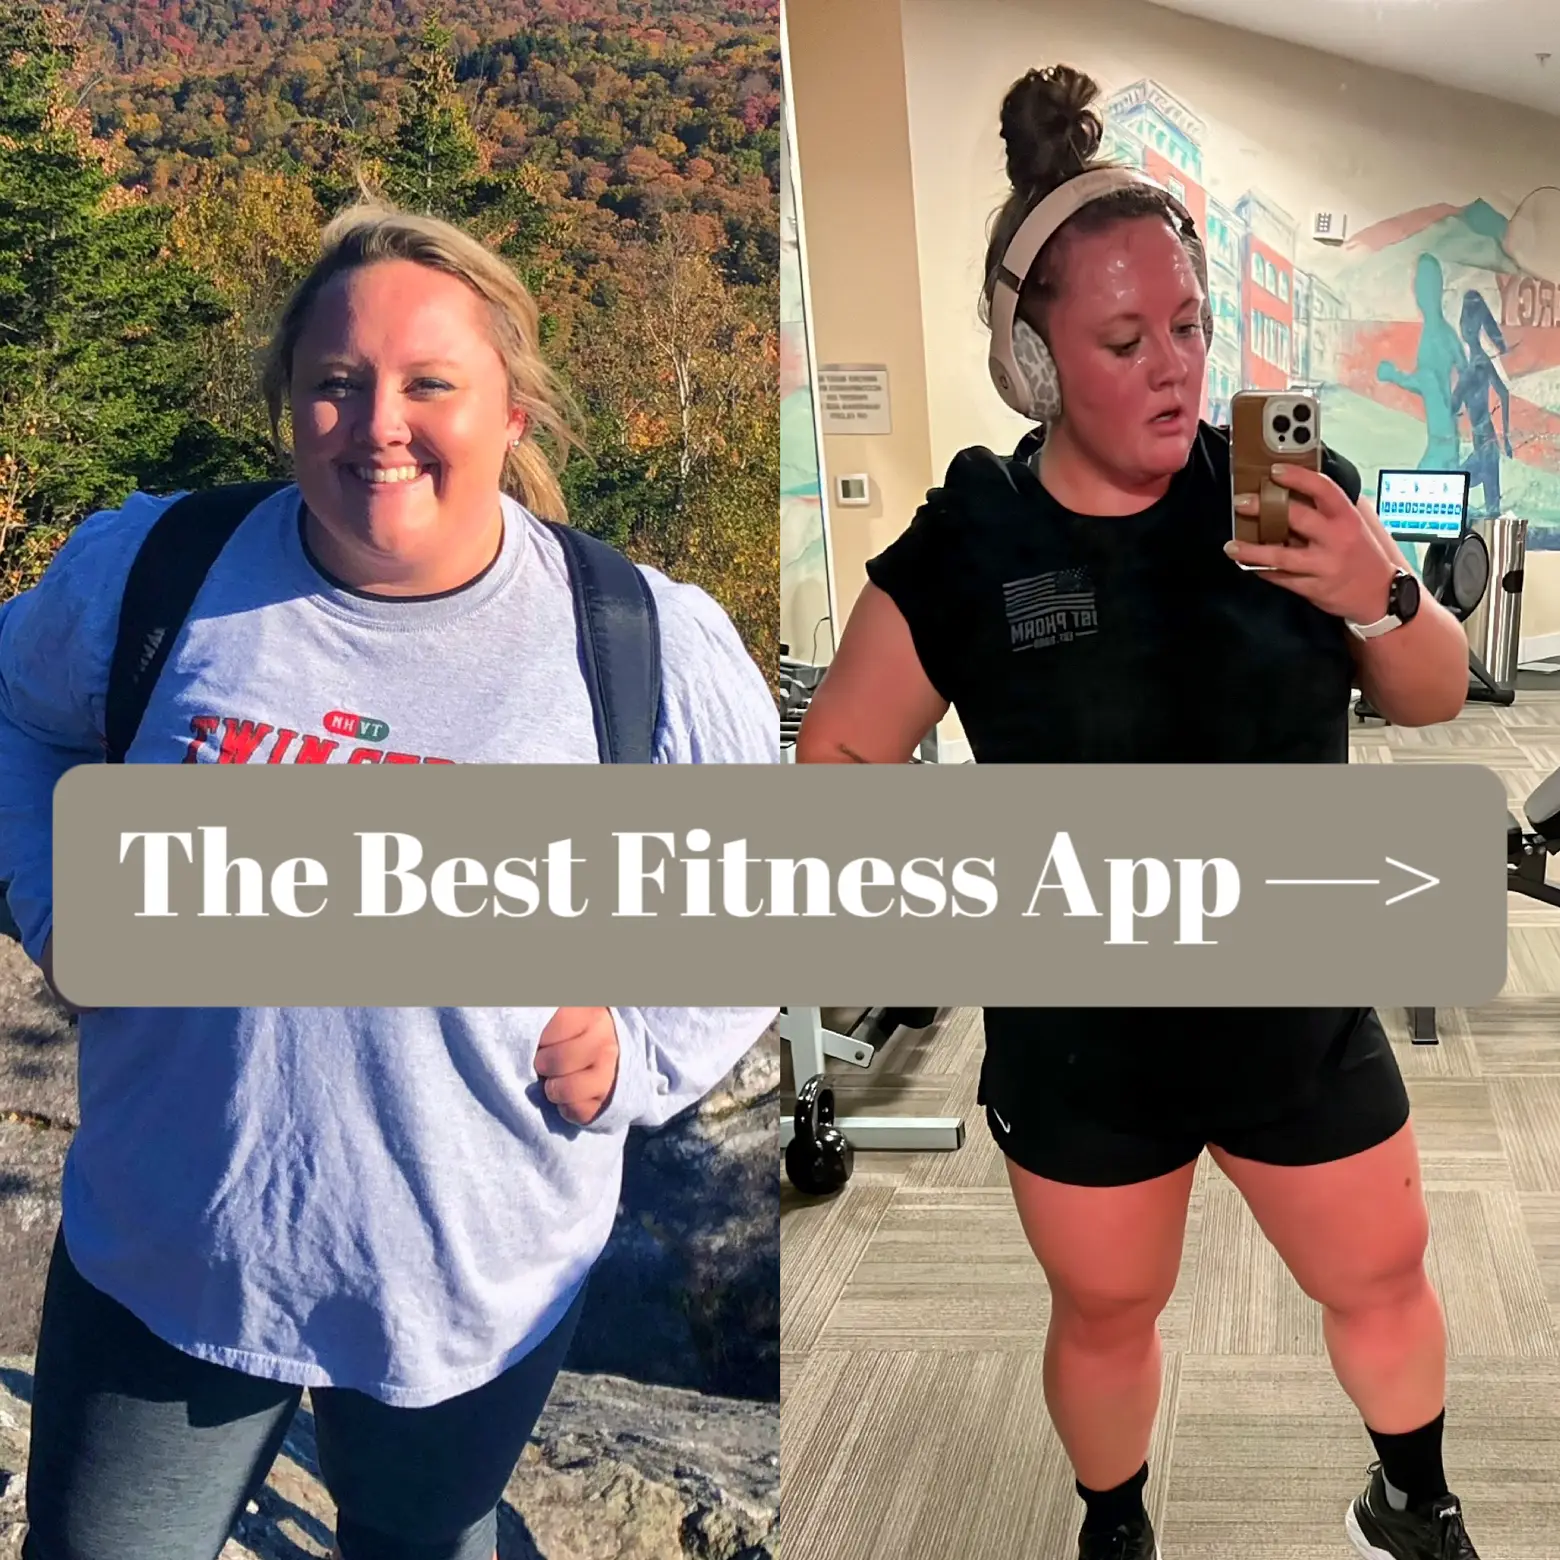 spring fitness apps - Lemon8 Search